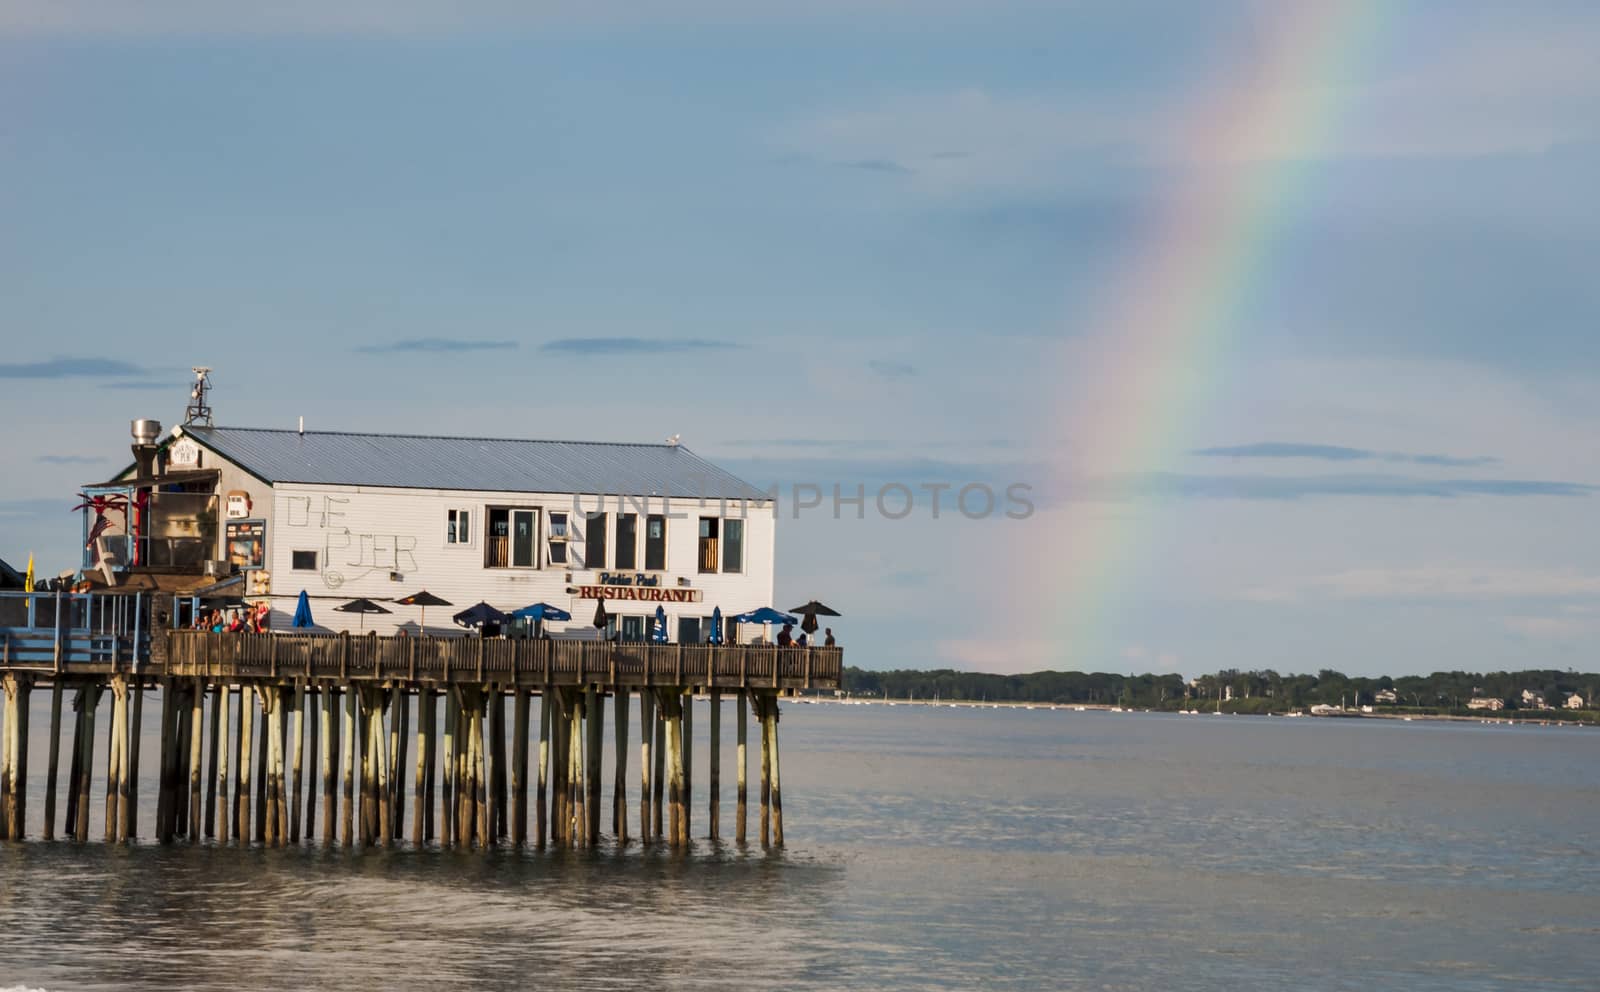 Rainbow on the beach by edella